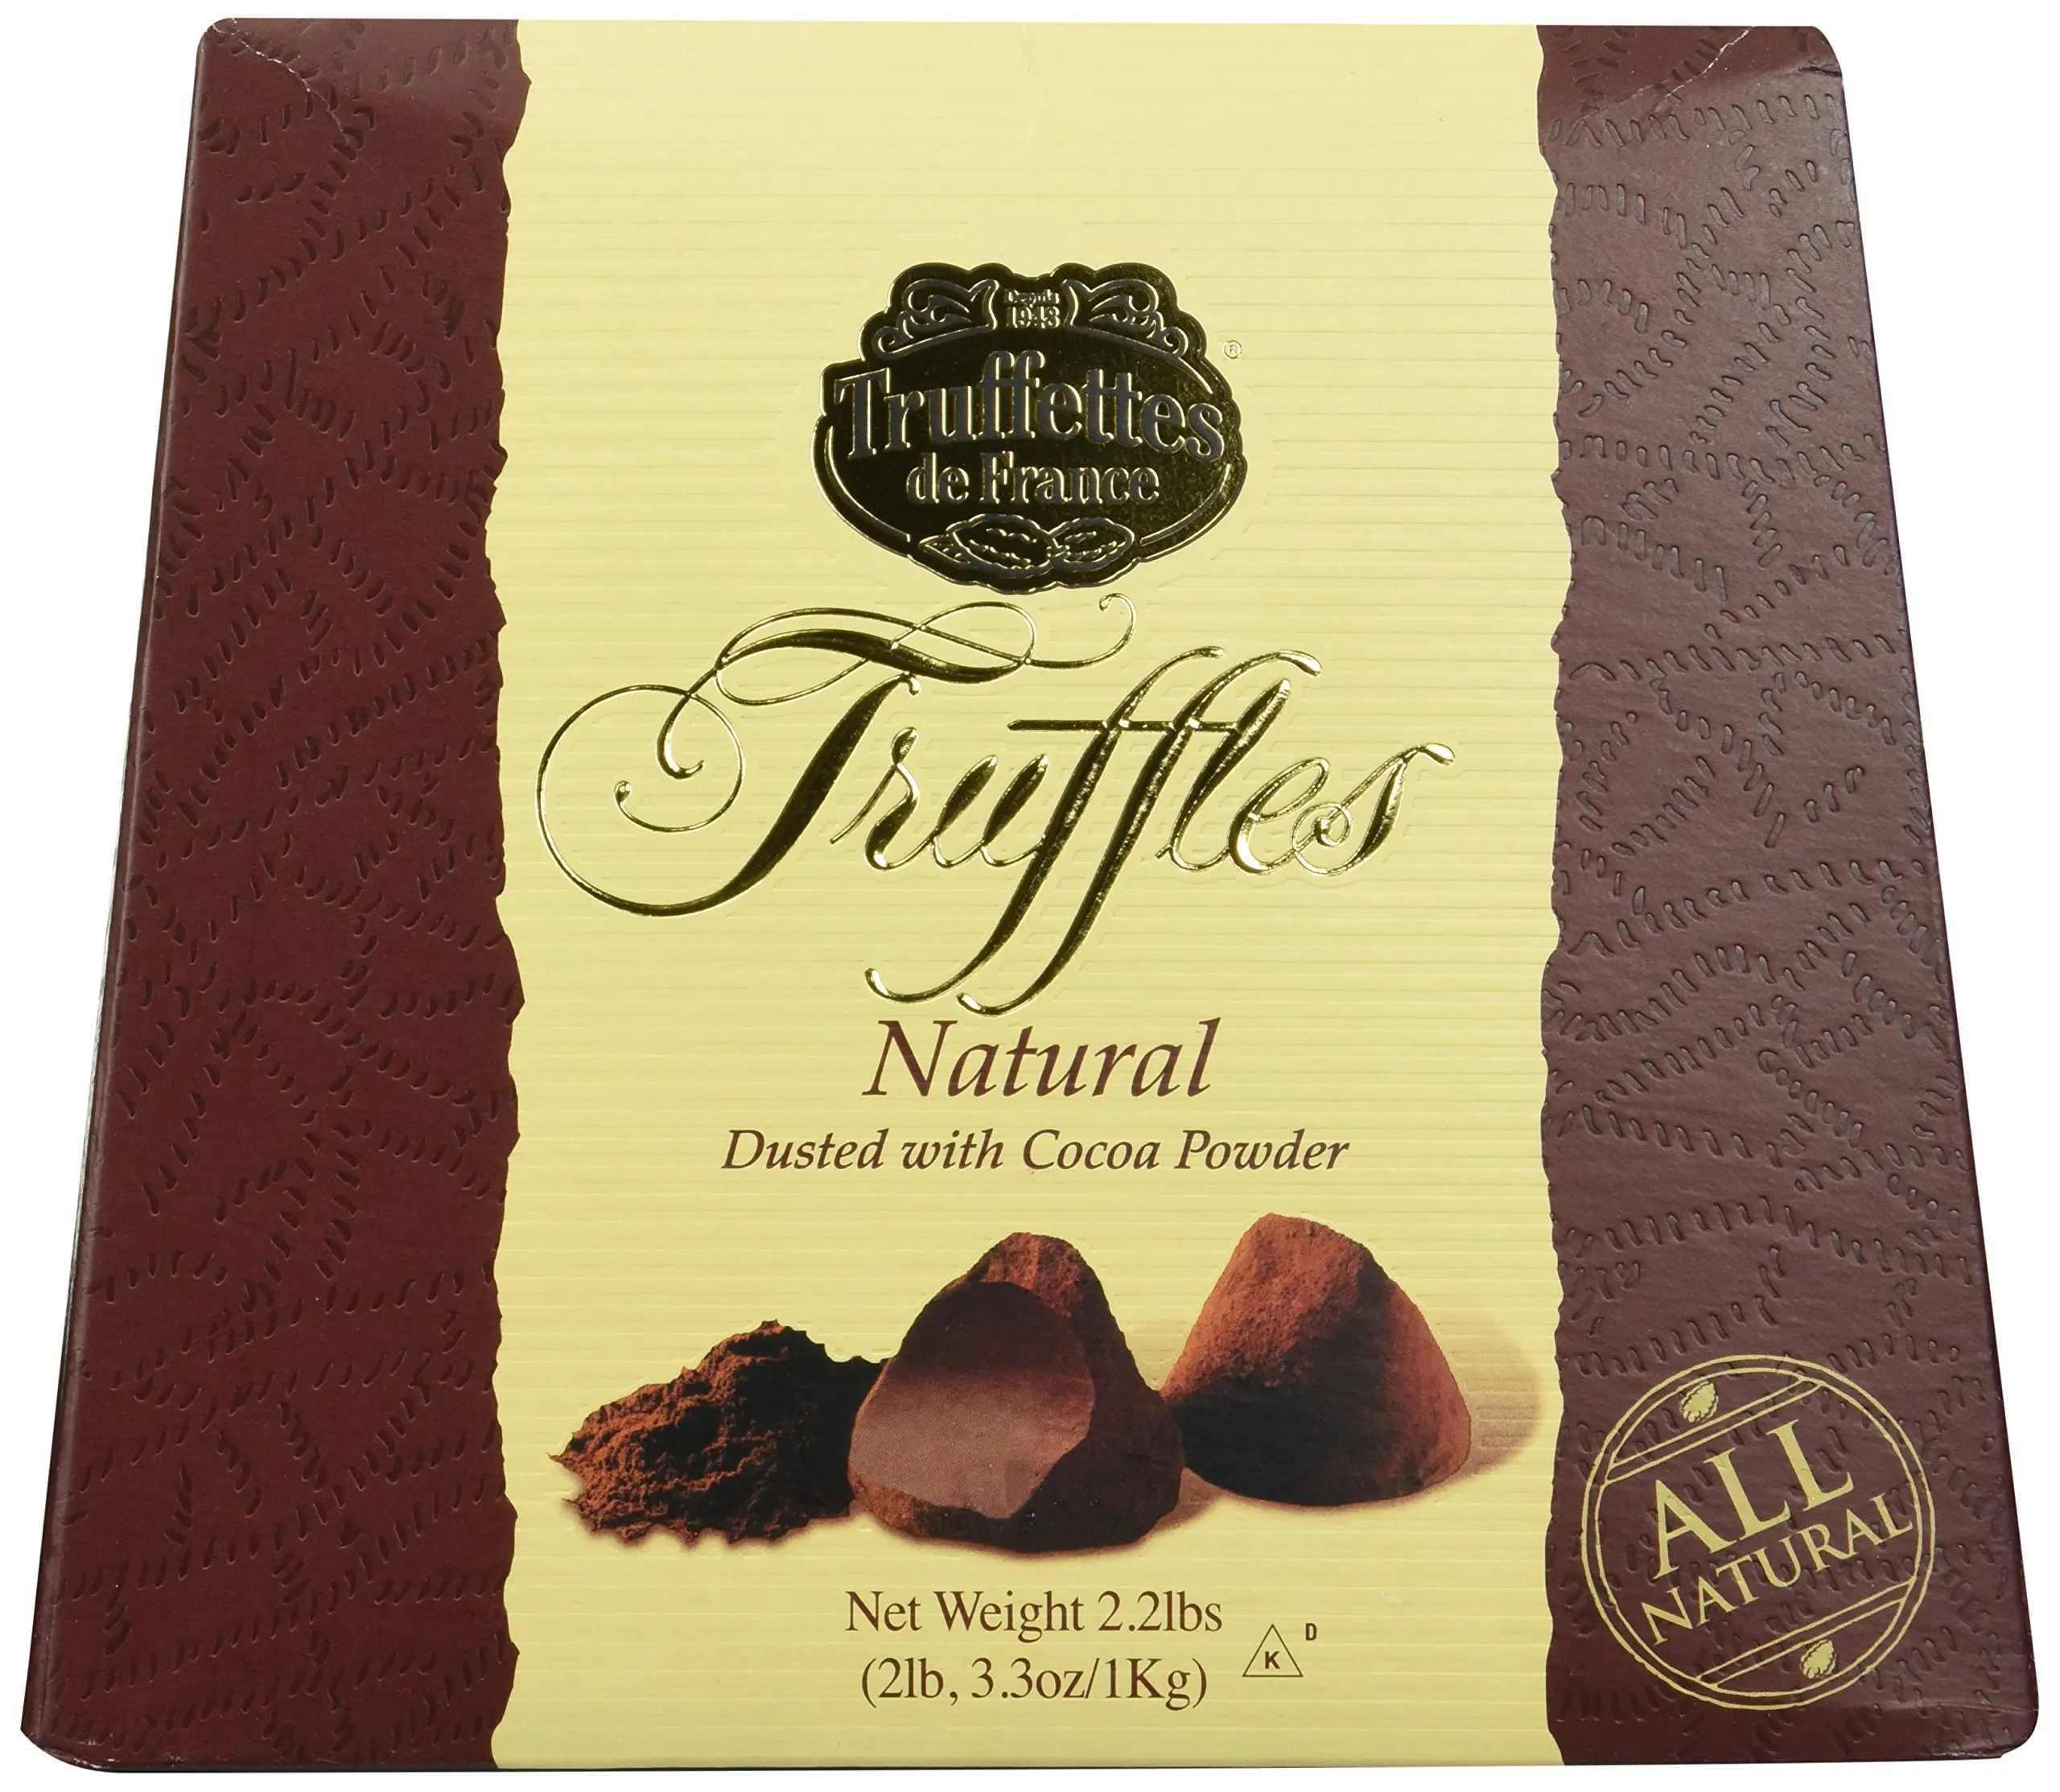 48.99. Chocmod Truffettes de France 2.2lbs (1Kg) All Natural Truffles in a ...